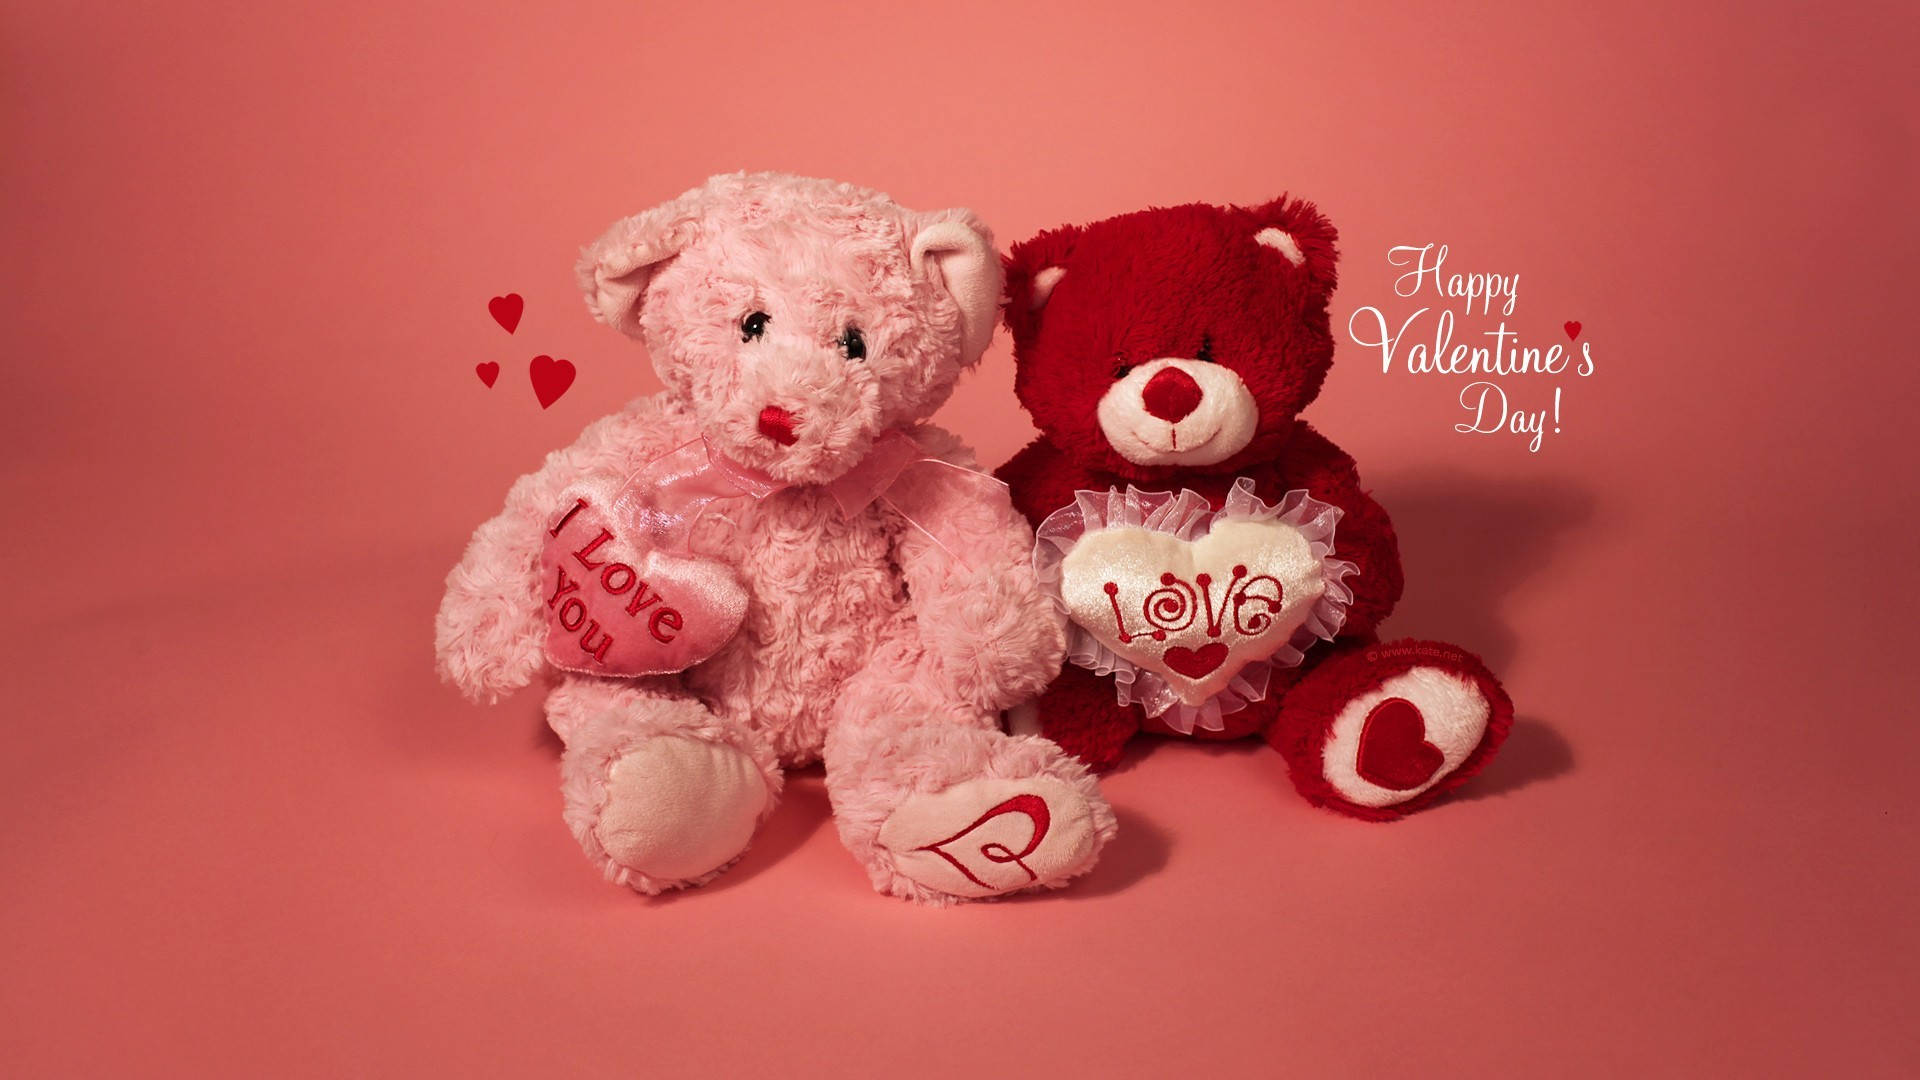 Happy Valentine’s Day Teddy Bears Wallpaper